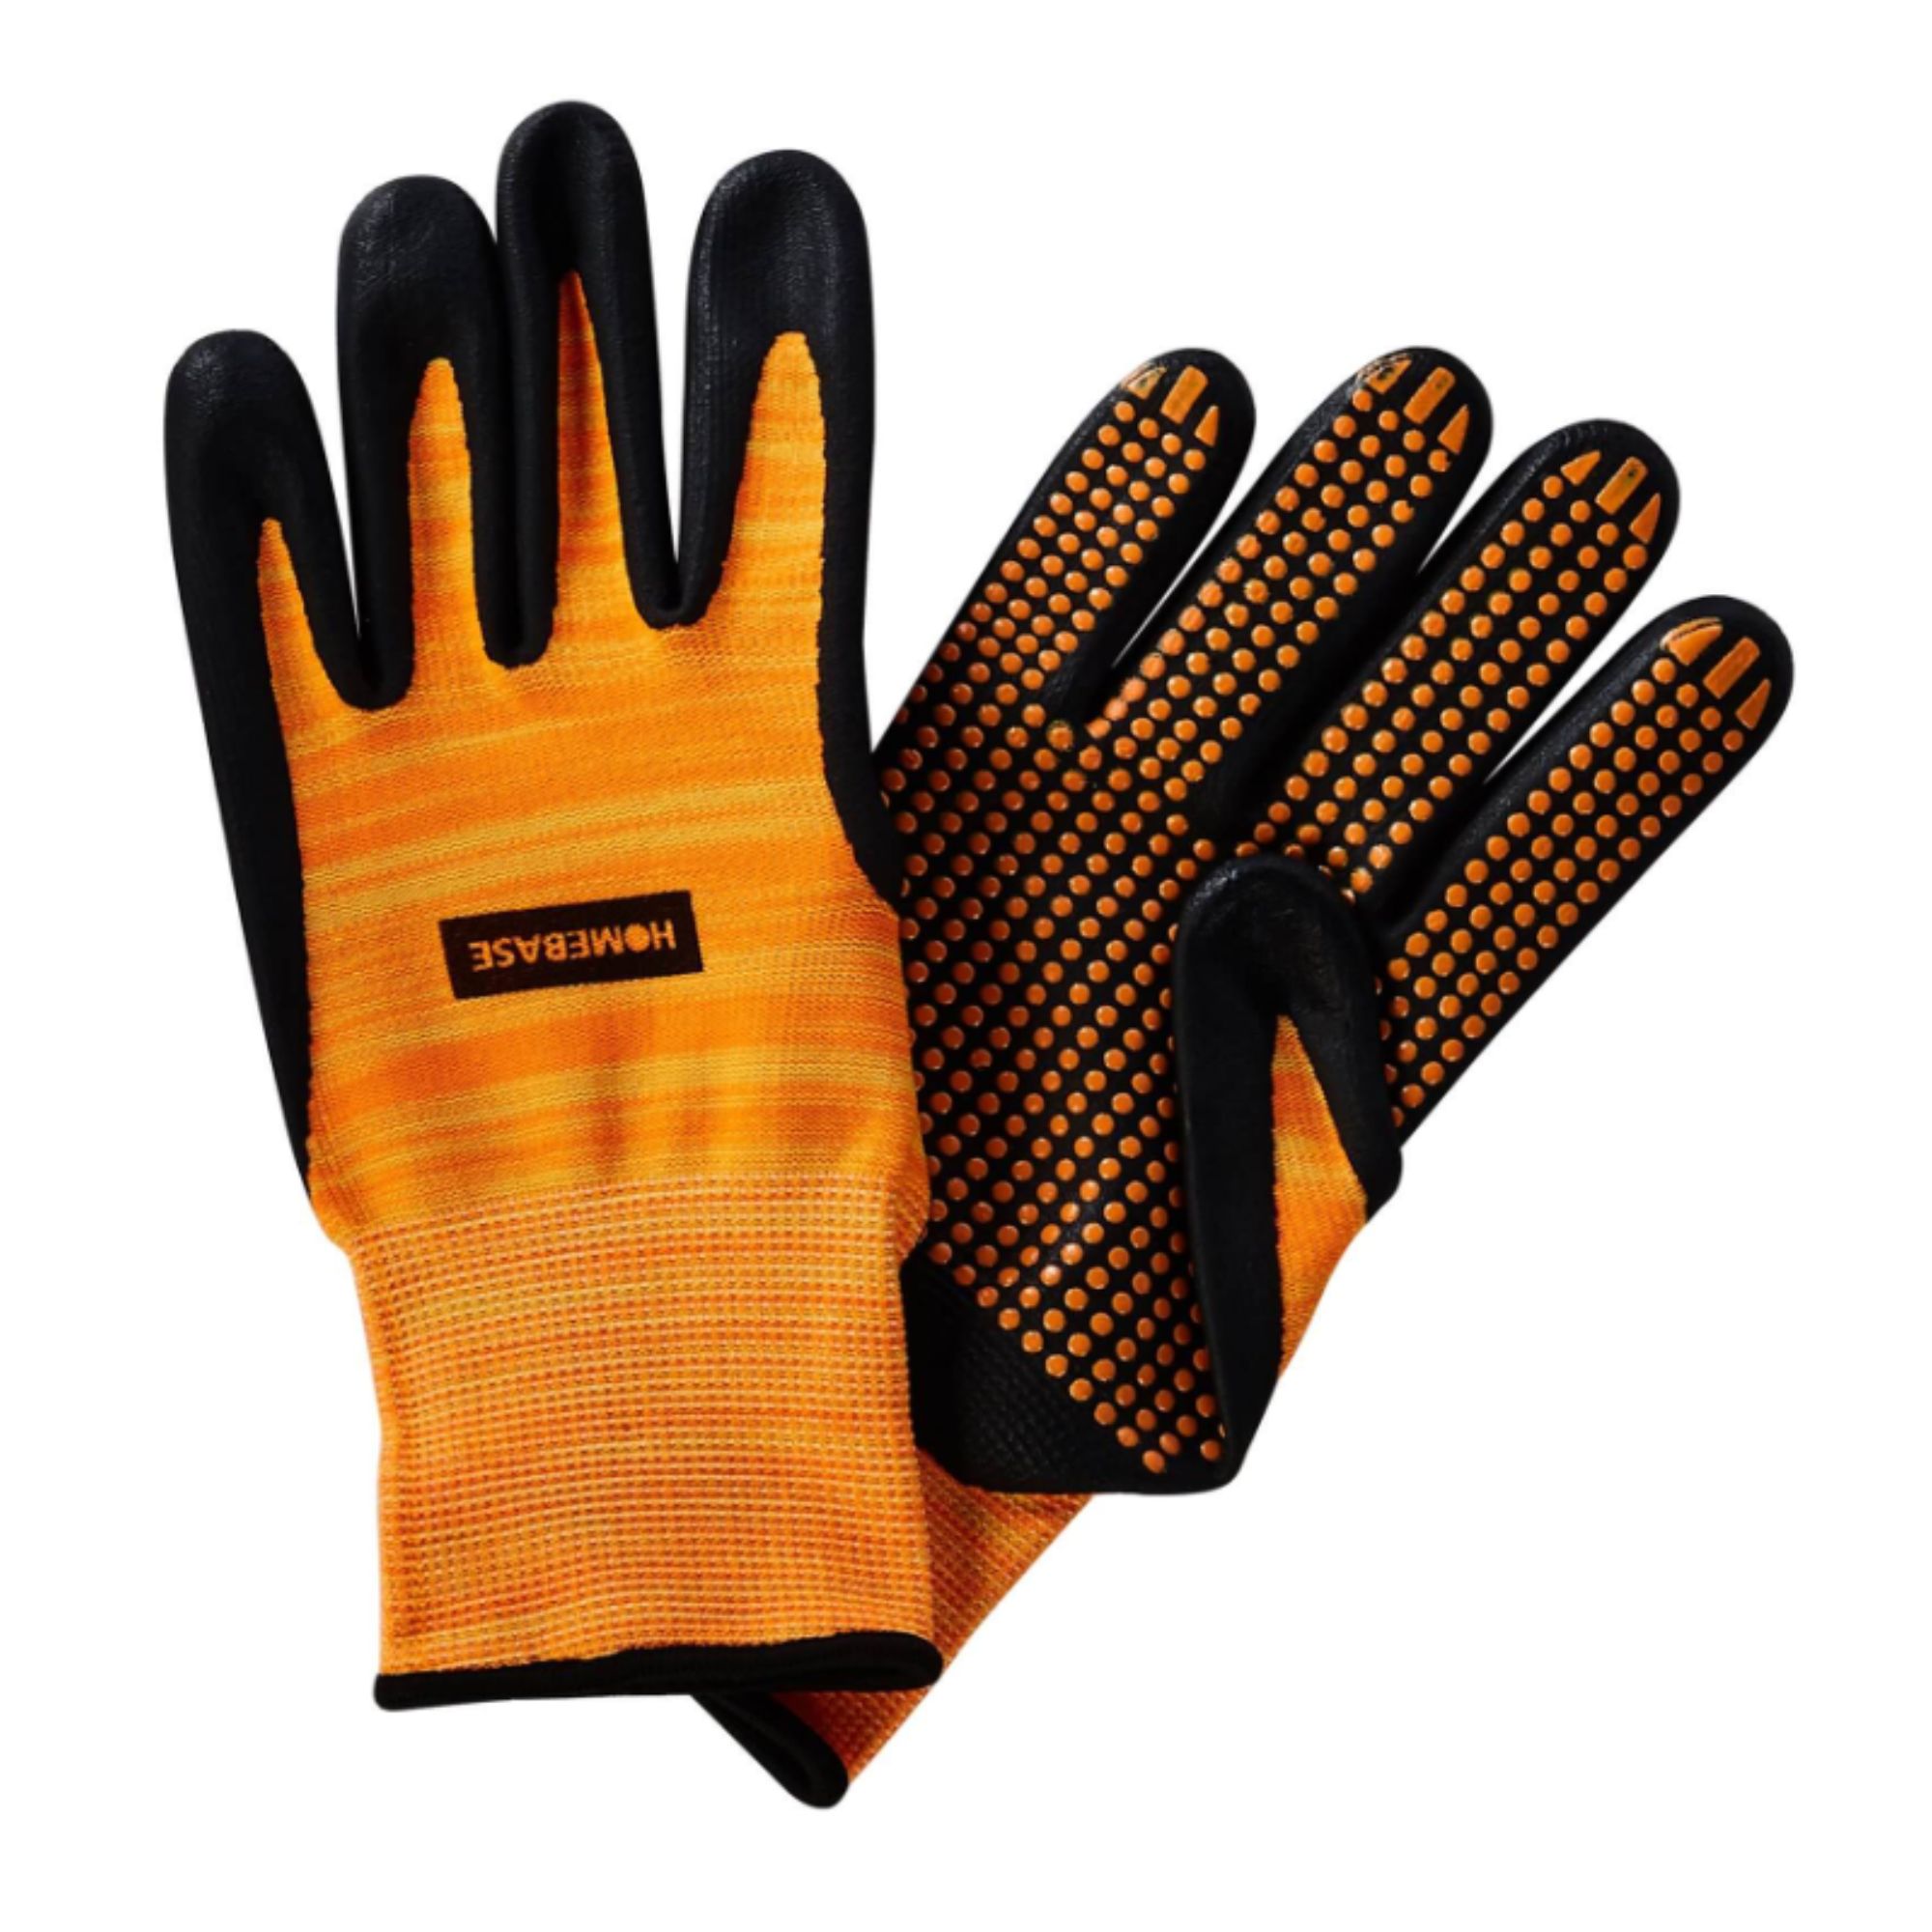 Homebase Protect & Grip Gardening Gloves - Large